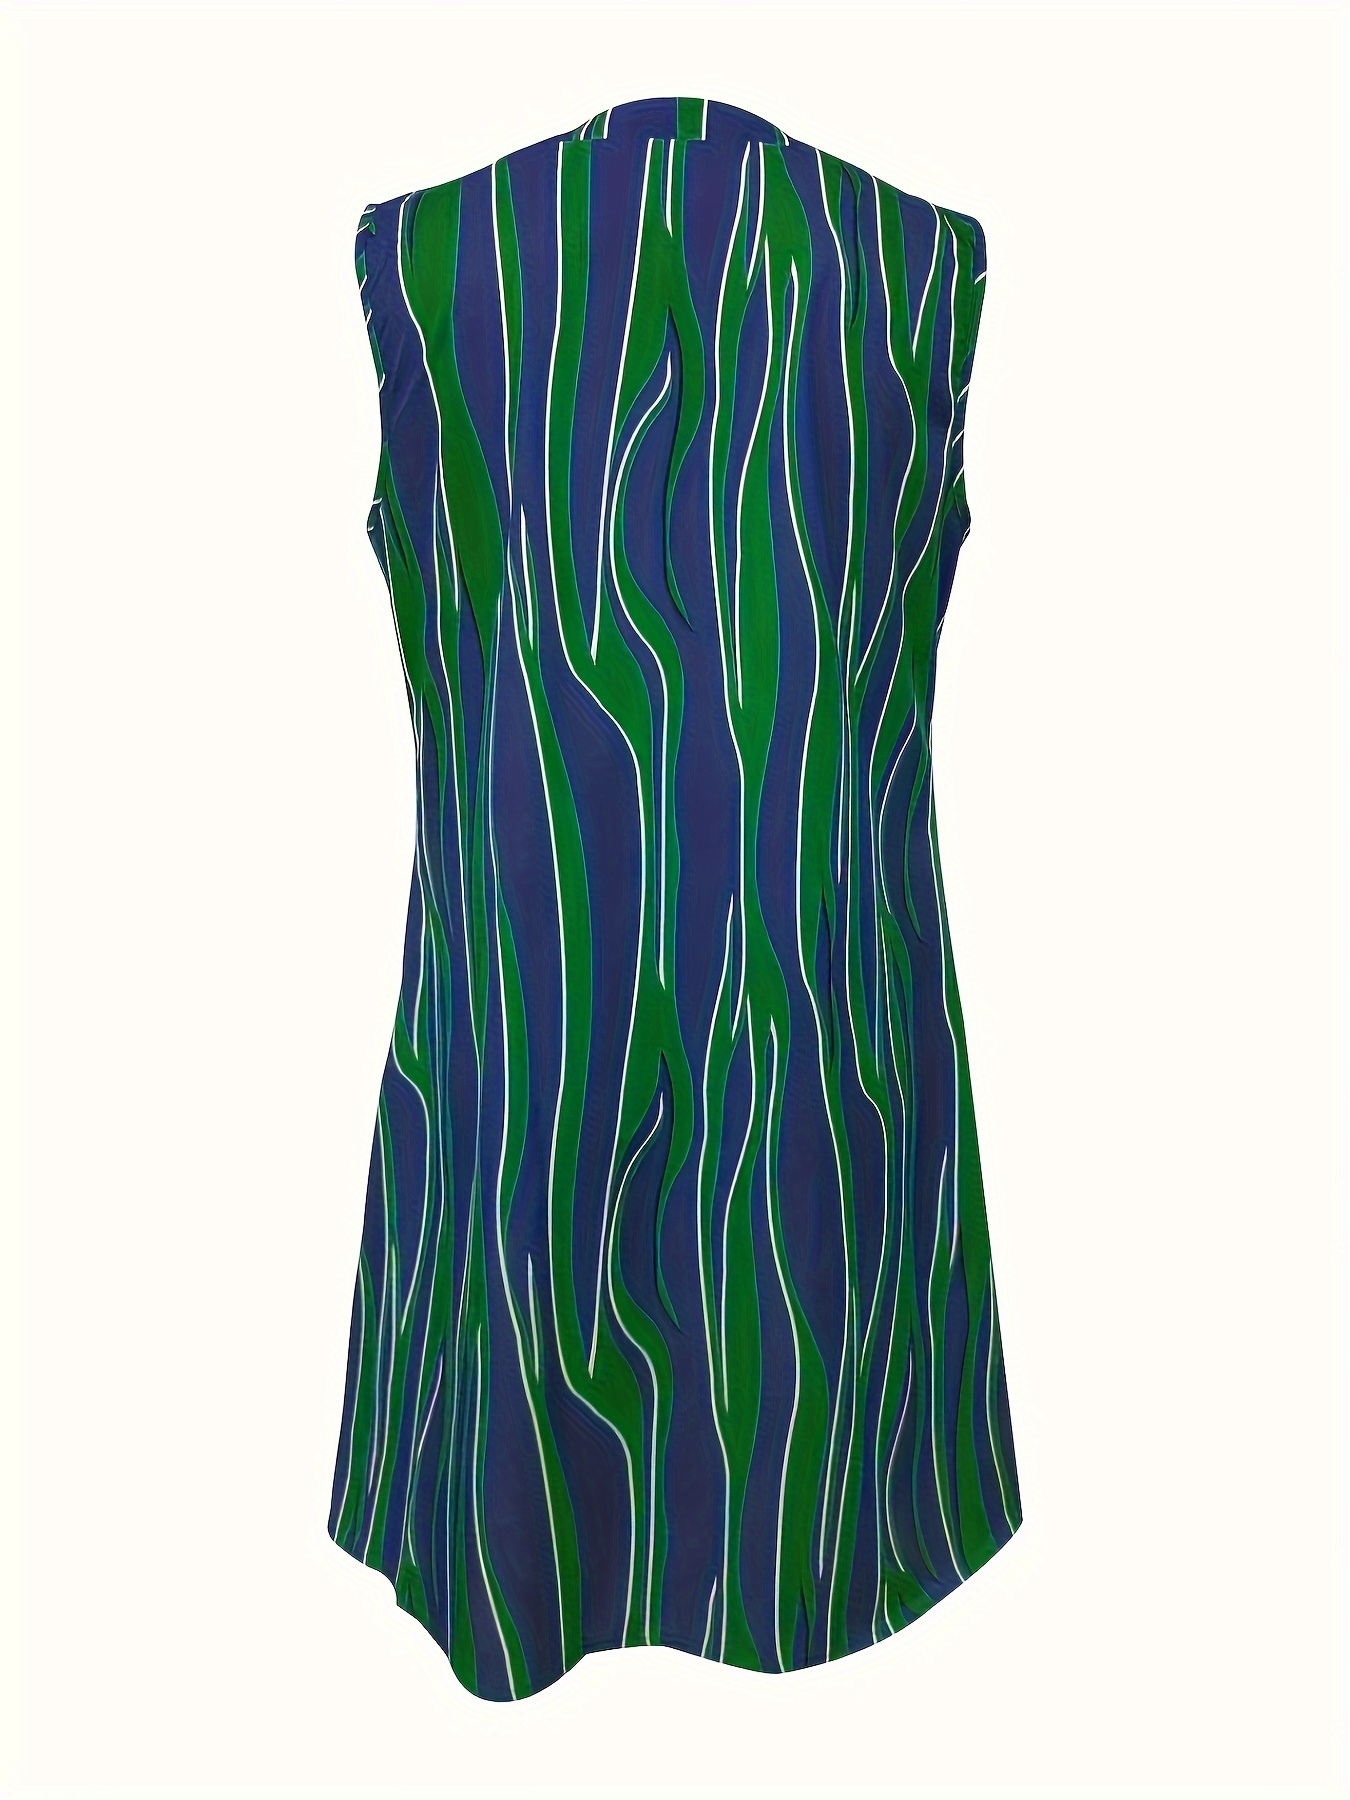 abstract ripple print dress casual v neck sleeveless dress womens clothing details 16